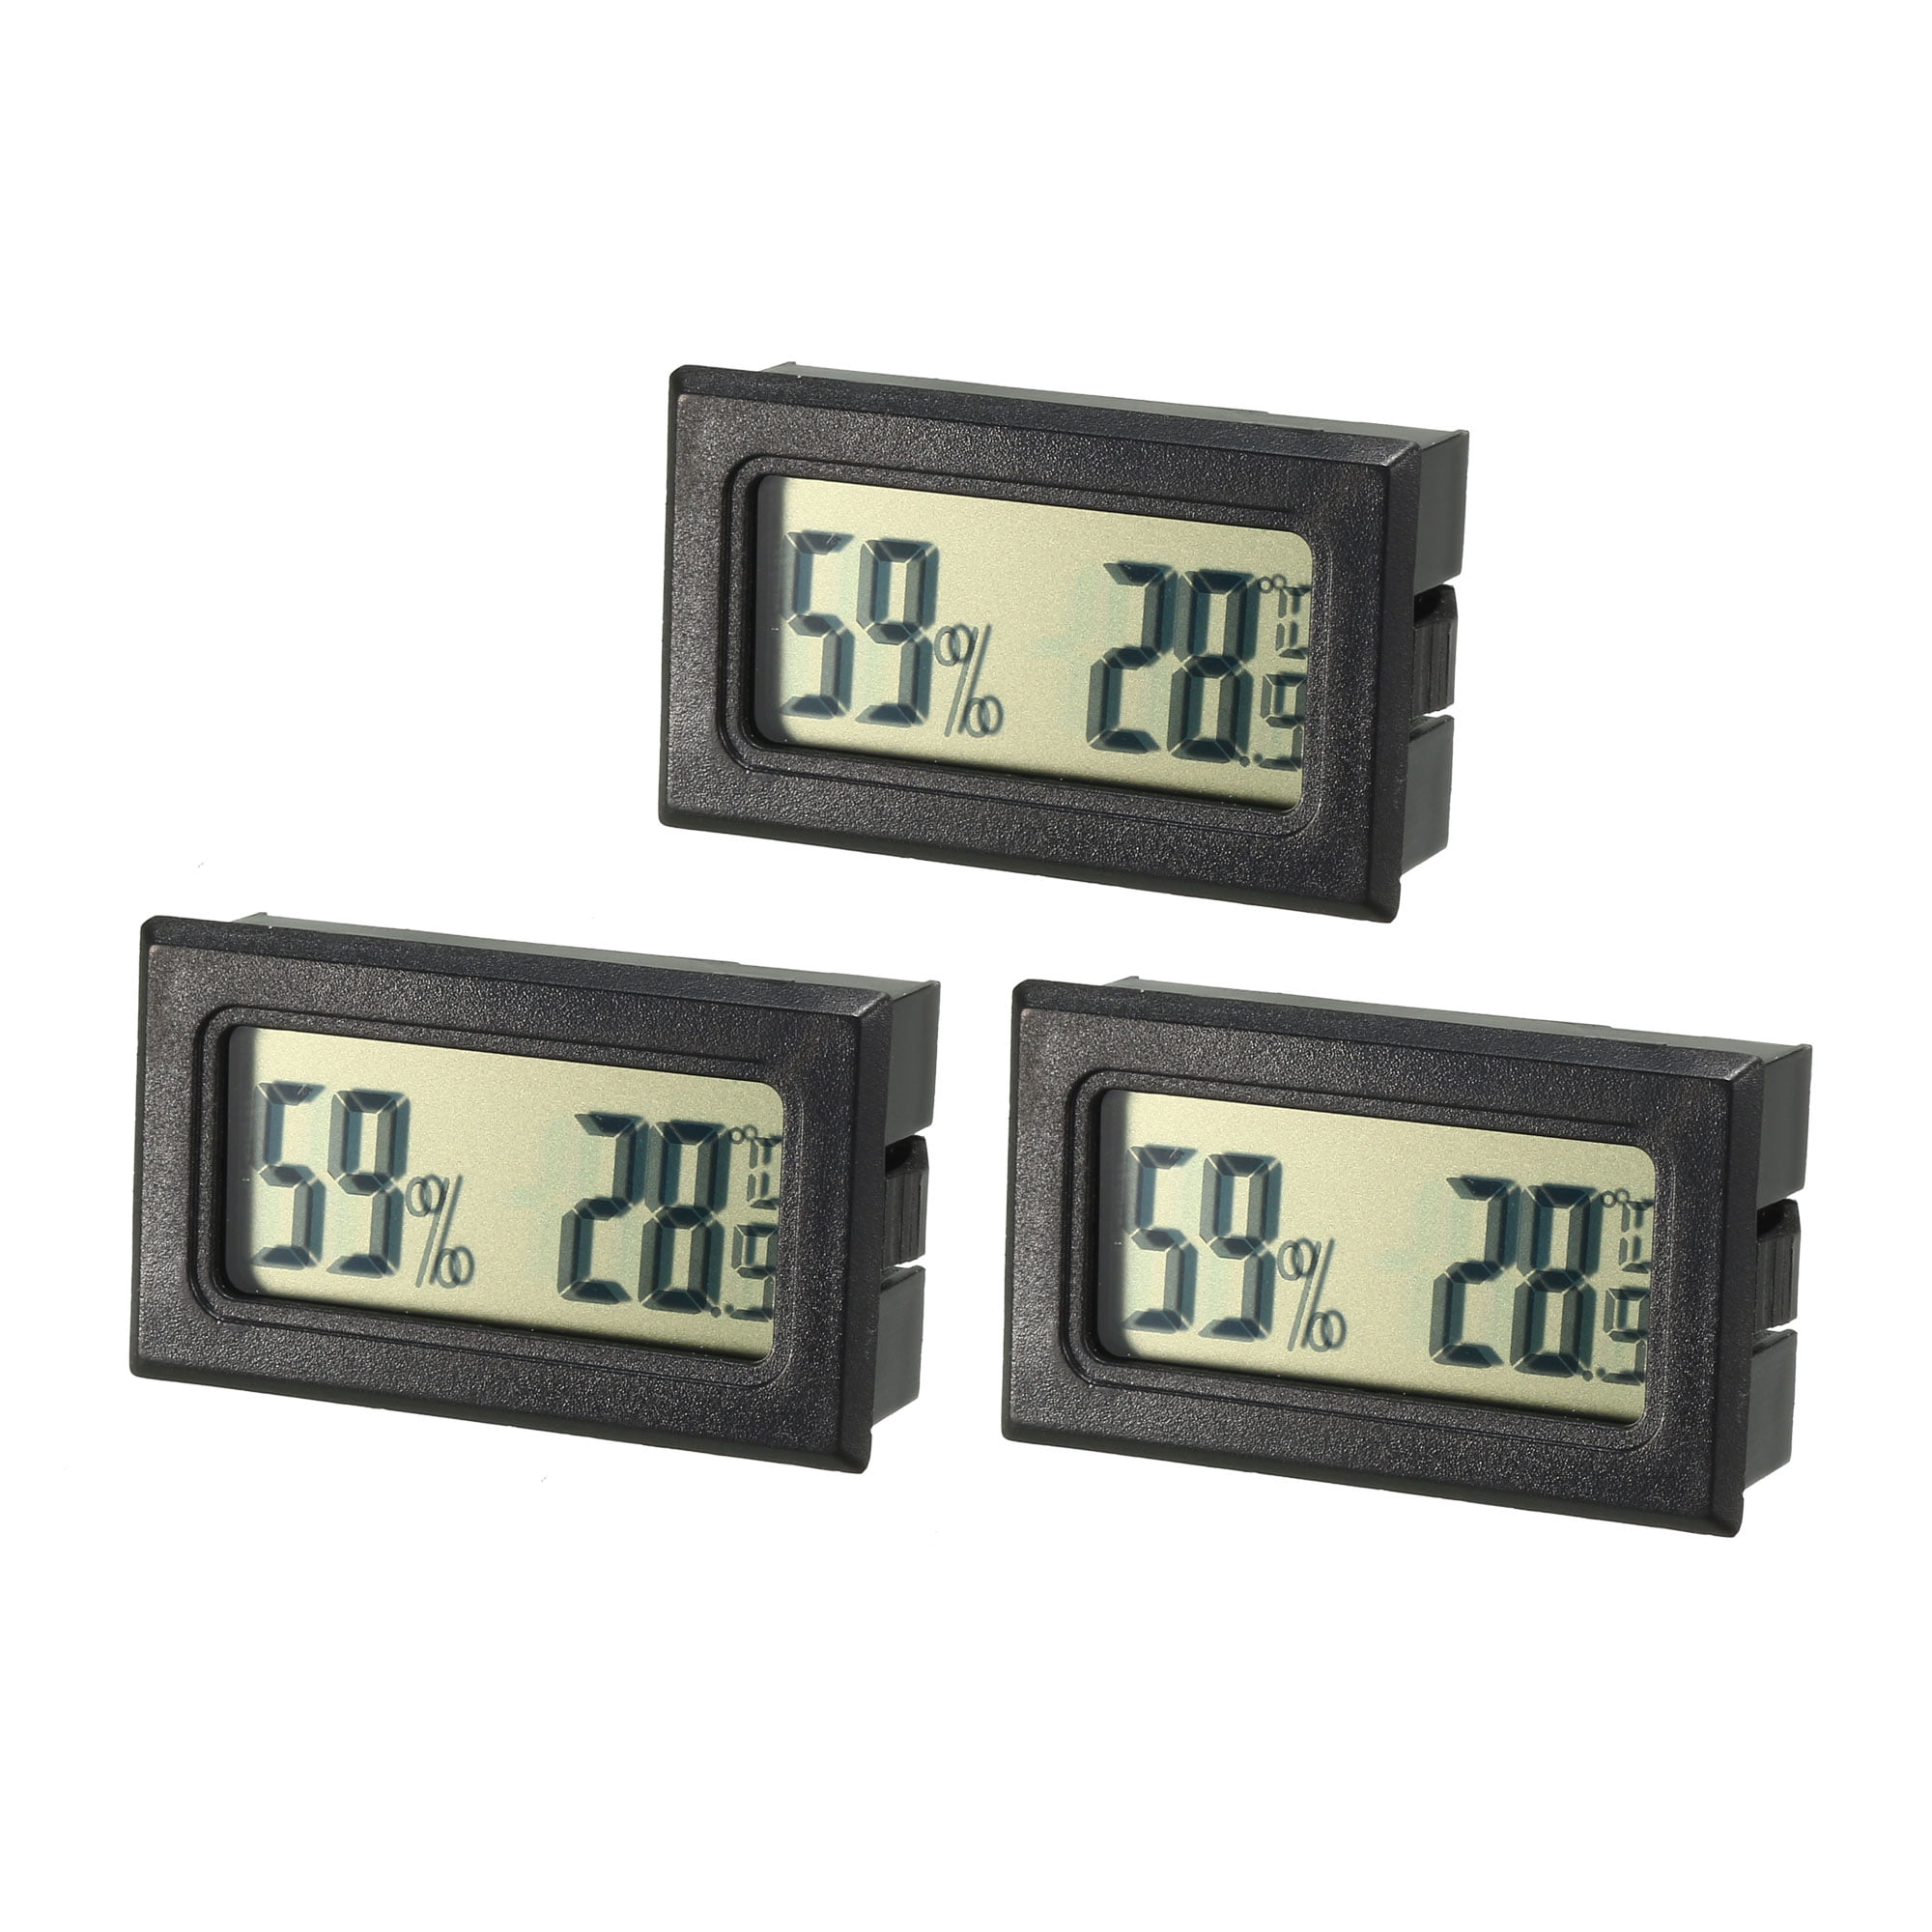 4 Pack Mini Small Digital Electronic Temperature Humidity Meters Gauge Indoor